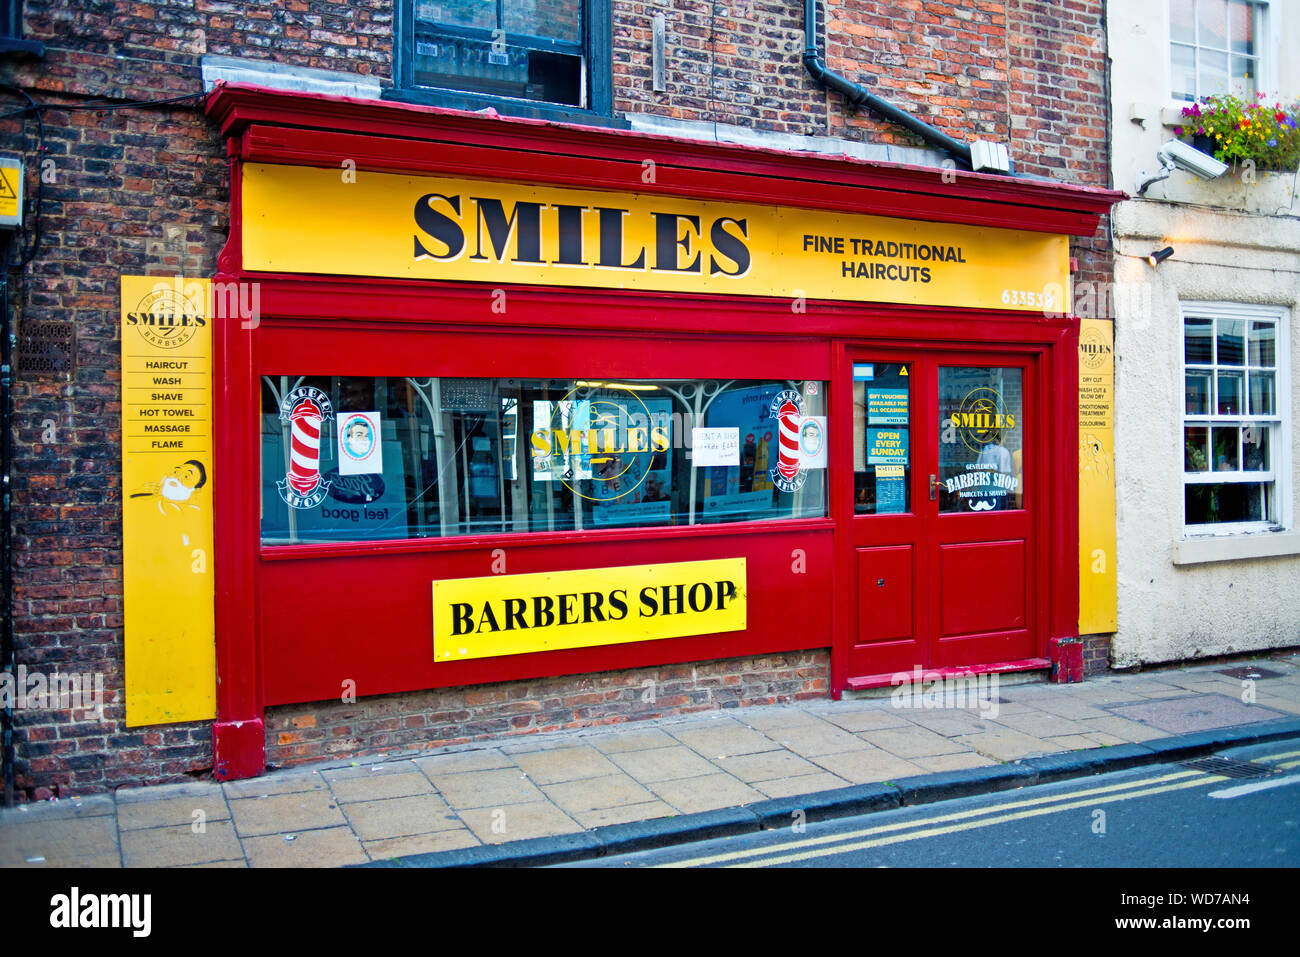 Smiles barbers, Goodramgate, York, England Stock Photo